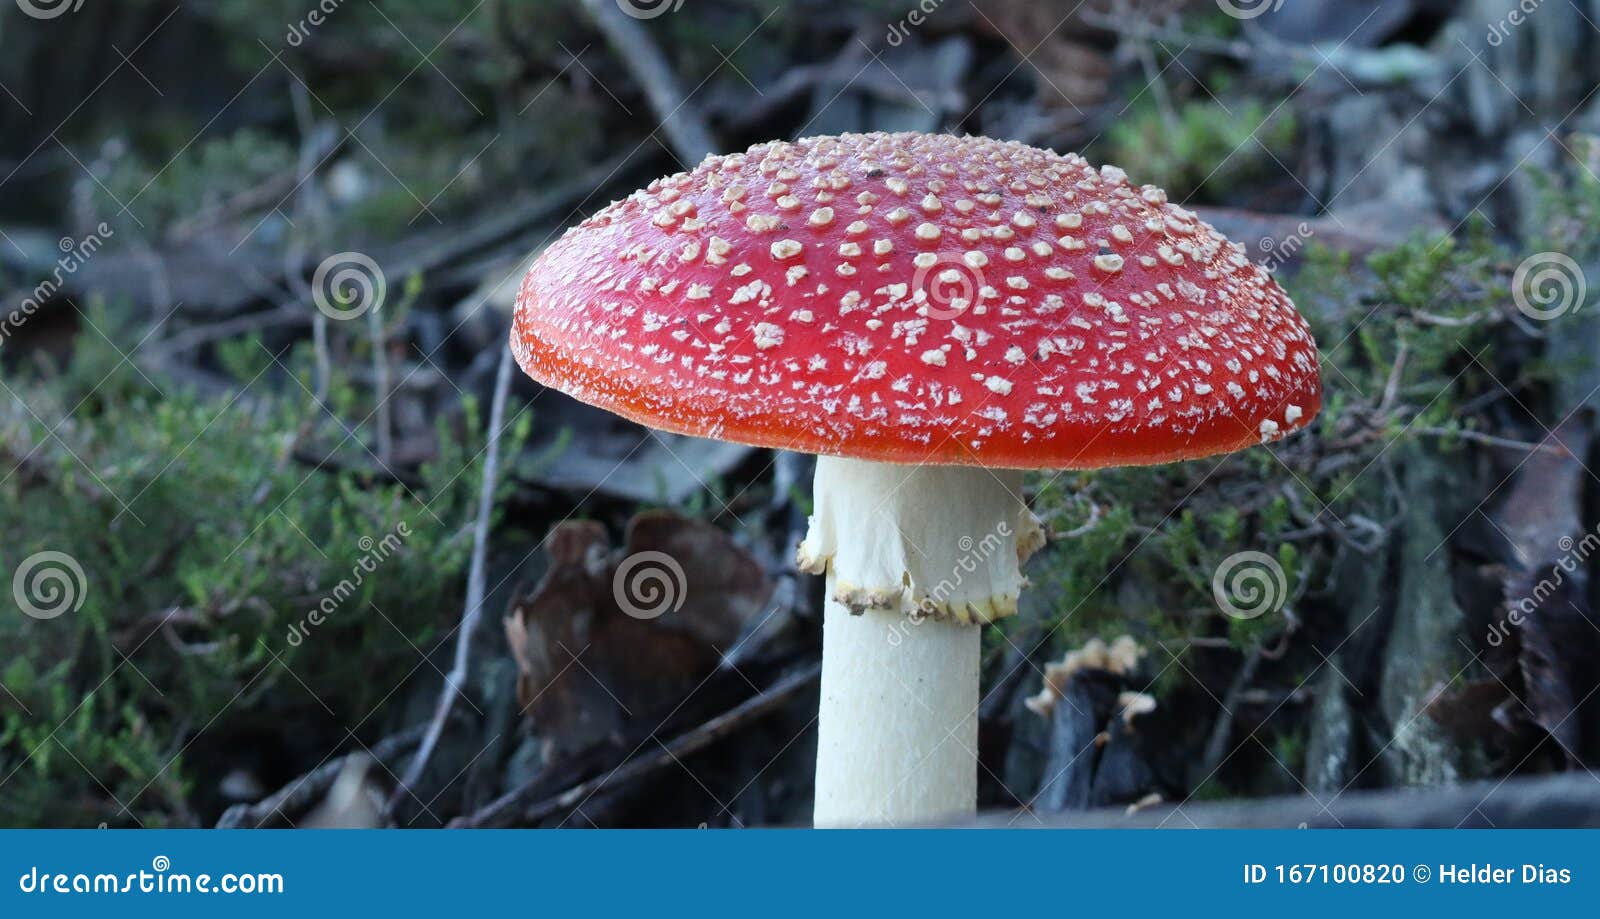 perfect red mushroom